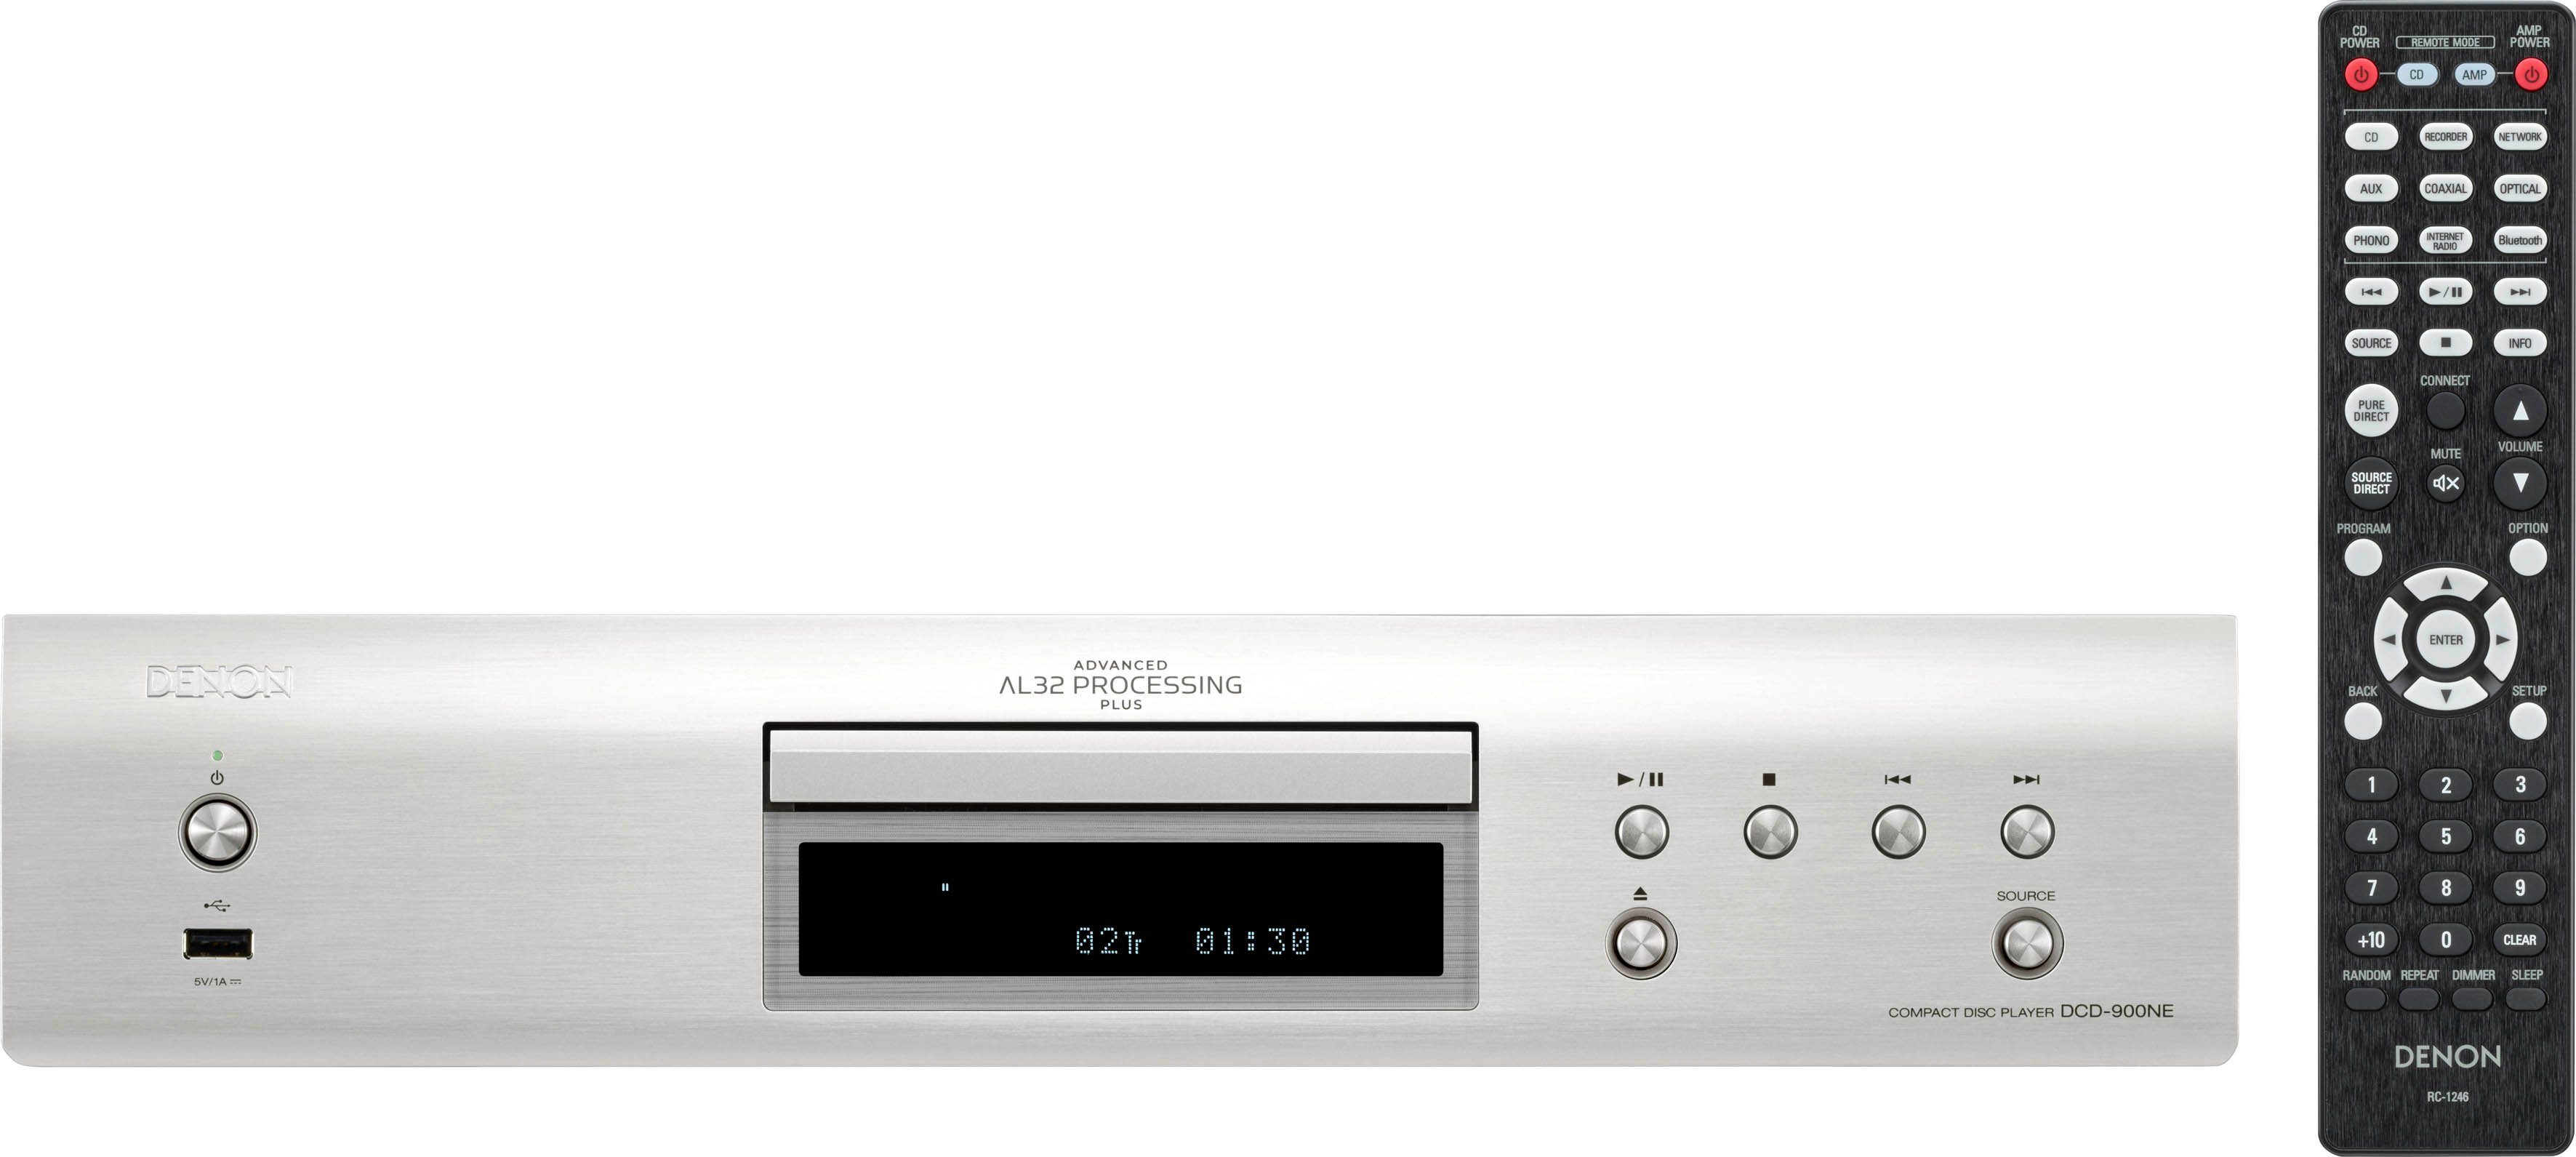 (USB-Audiowiedergabe) CD-Player DCD-900NE Denon silber